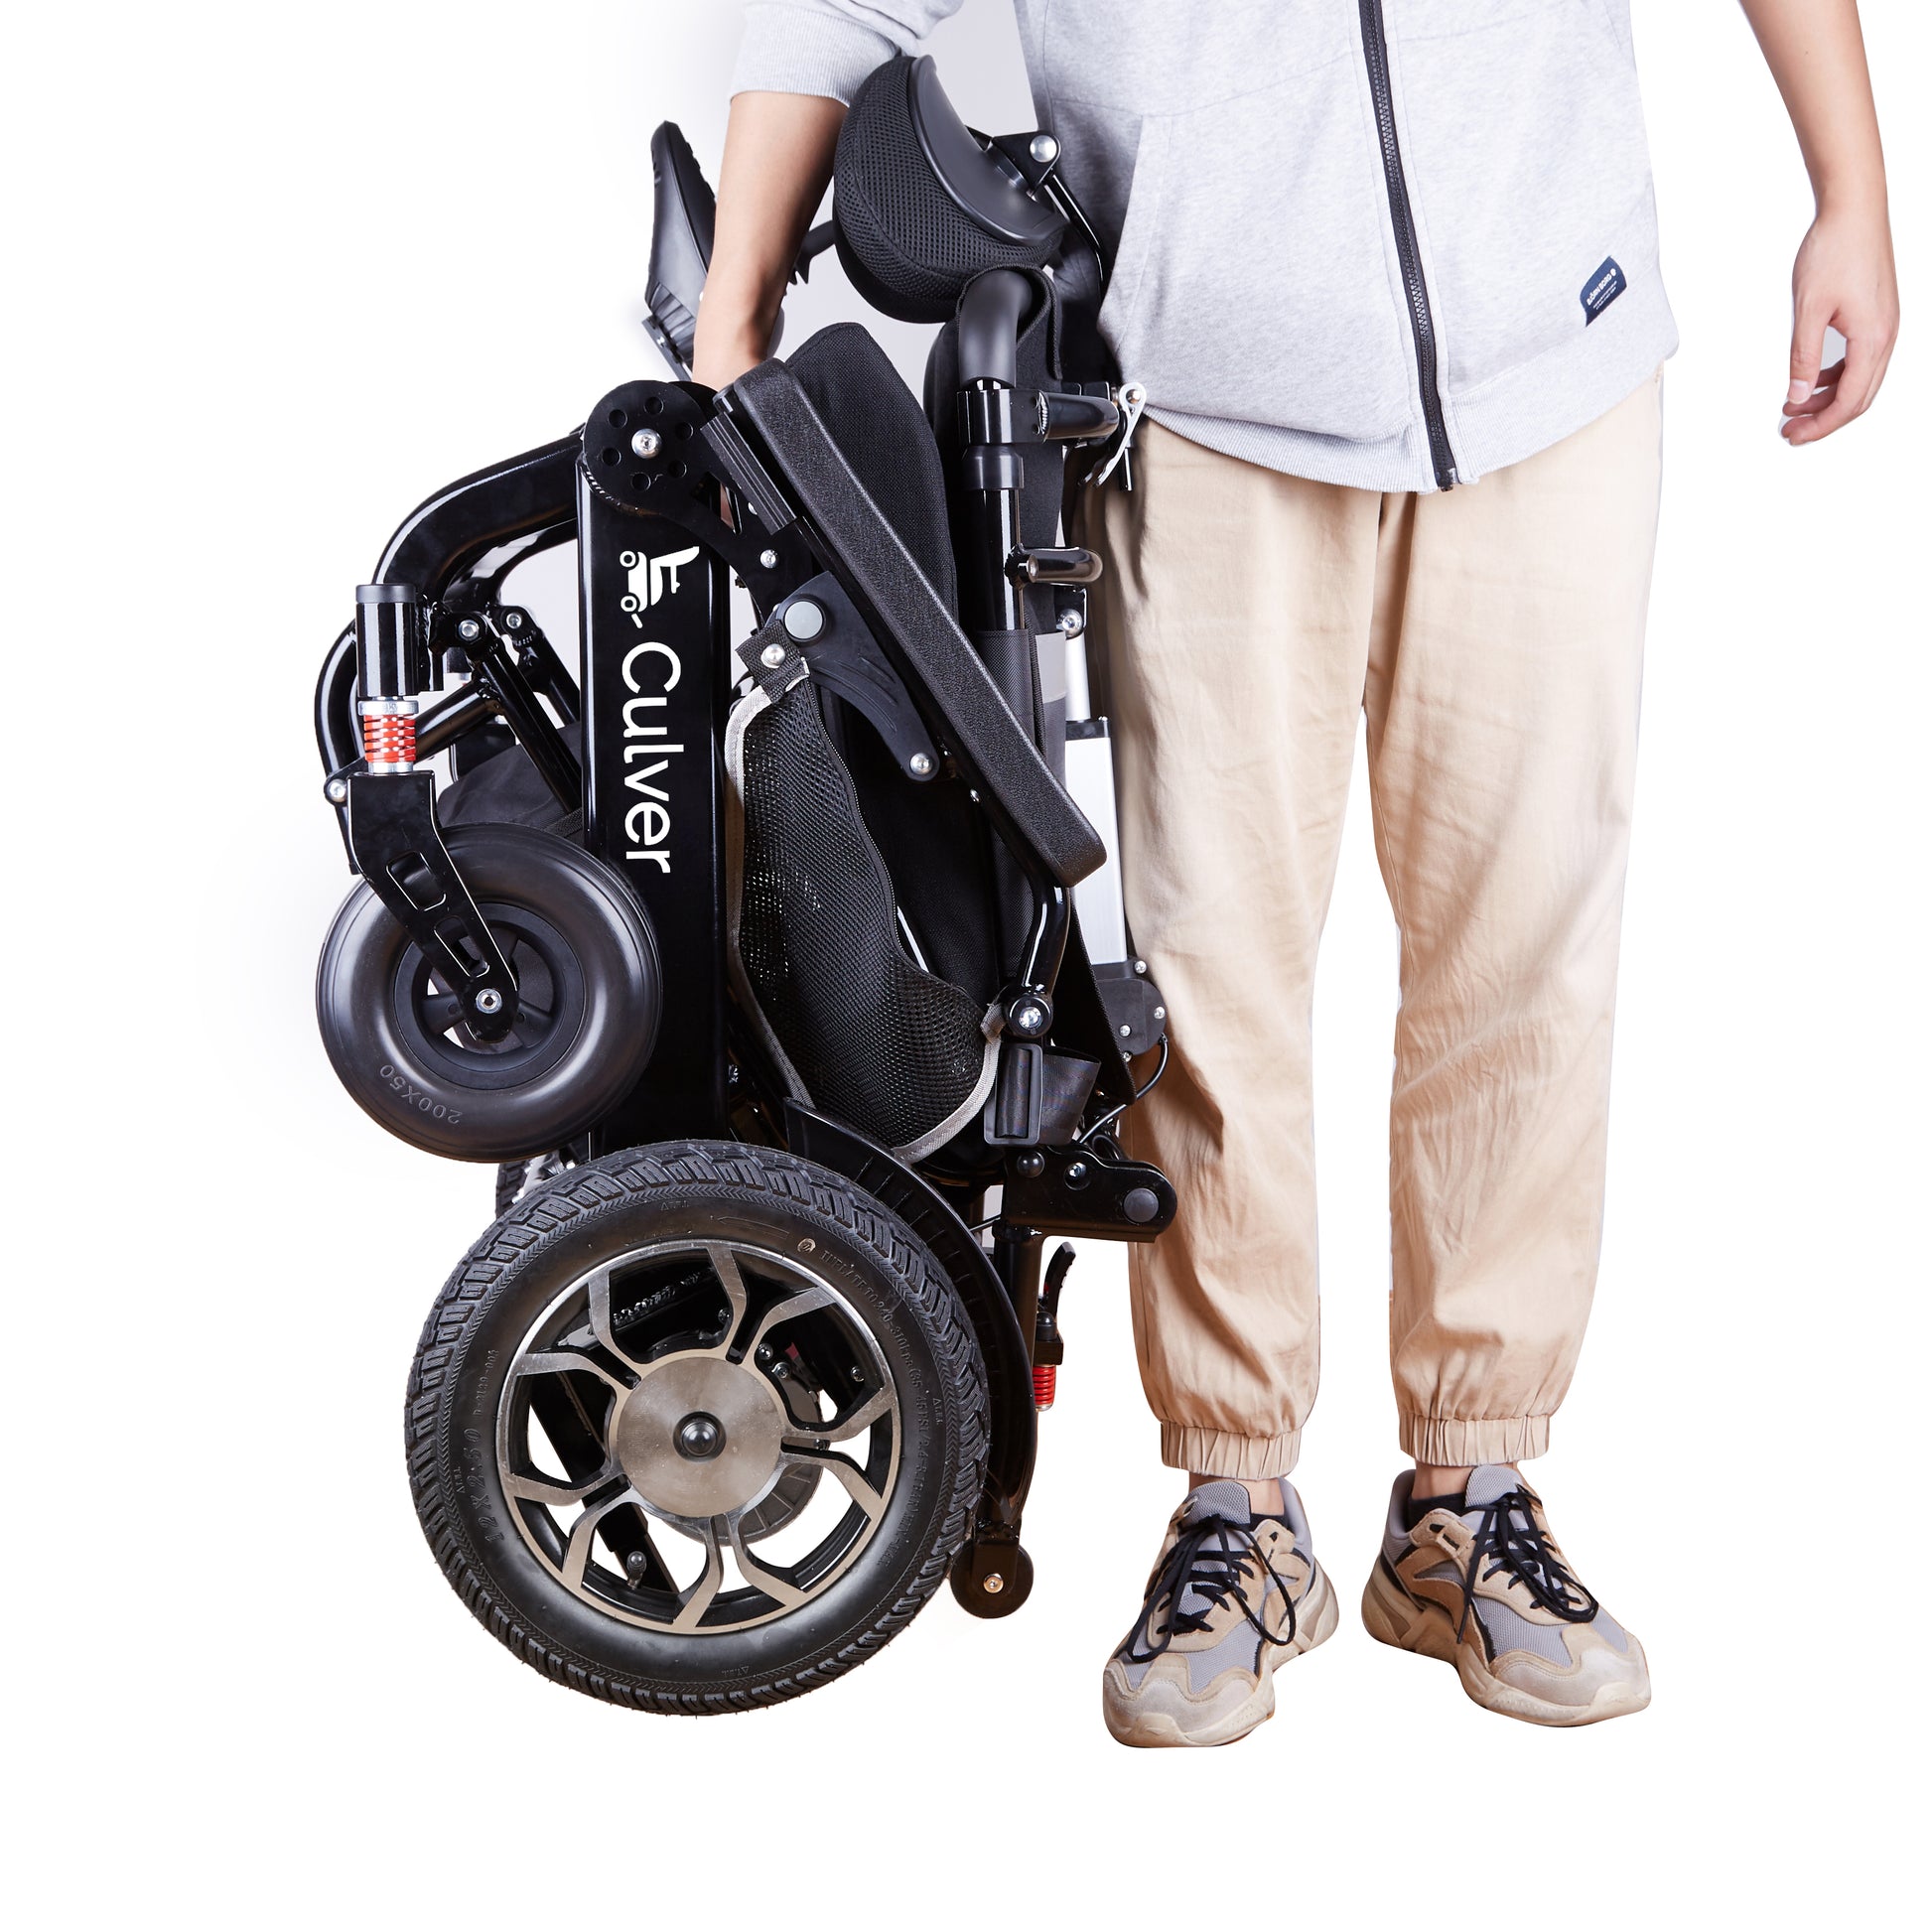 Best Power Wheelchair | Remote Control Wheelchair | Culver Mobility